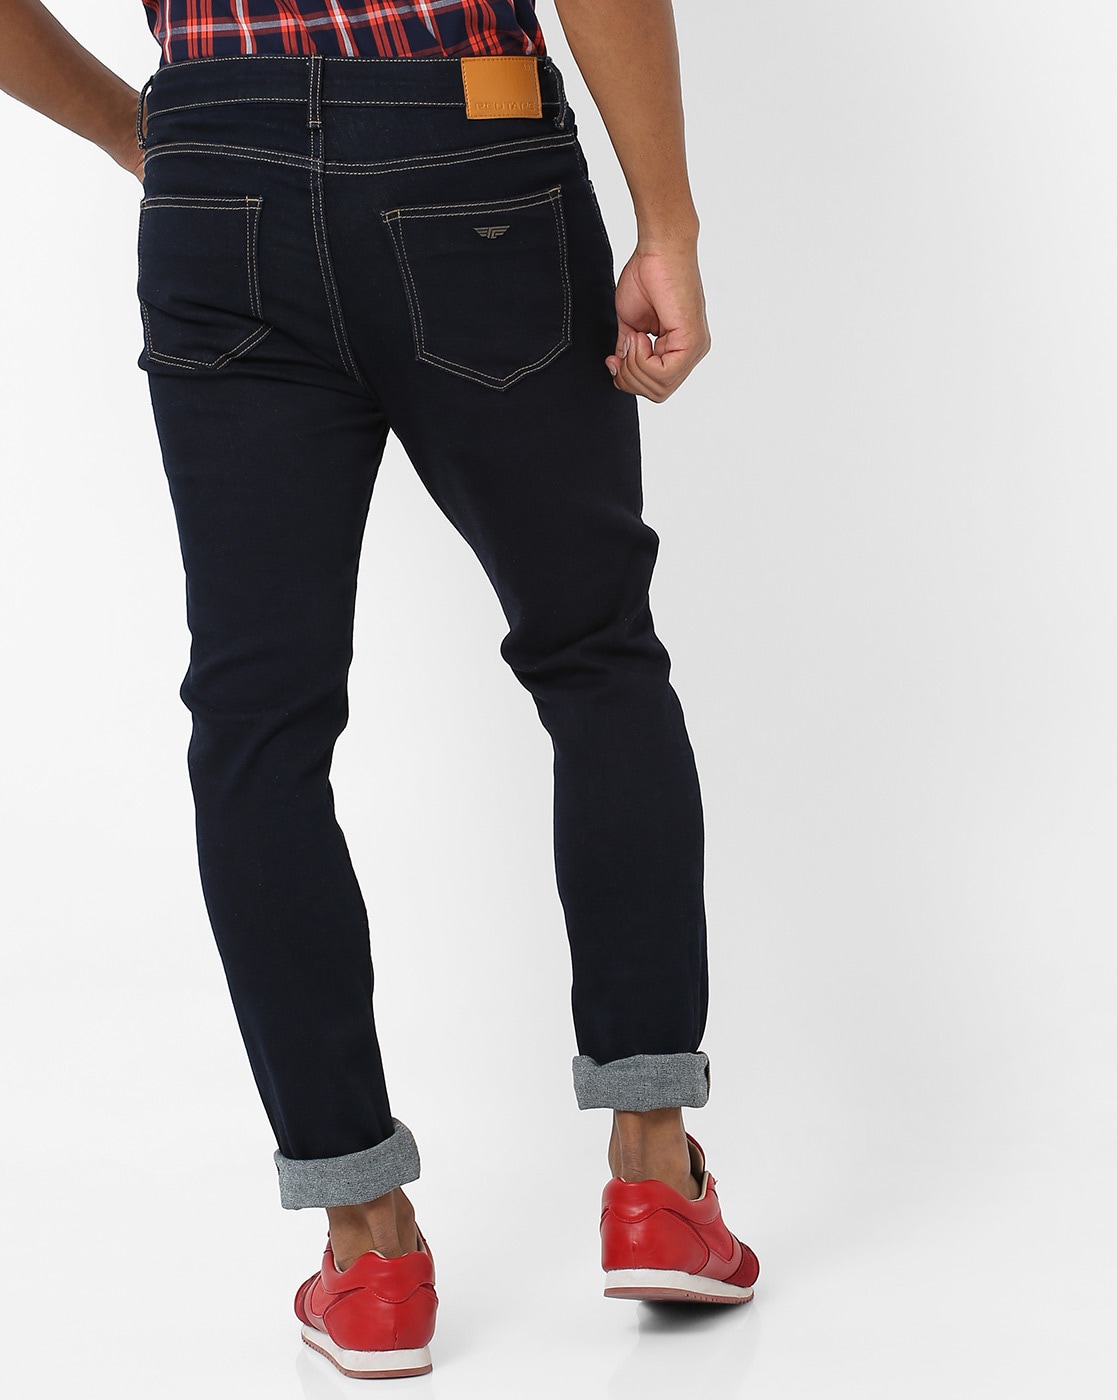 Red Tape Dark Blue Slim Stretch Jeans | RTD6590-DARK BLUE | Cilory.com